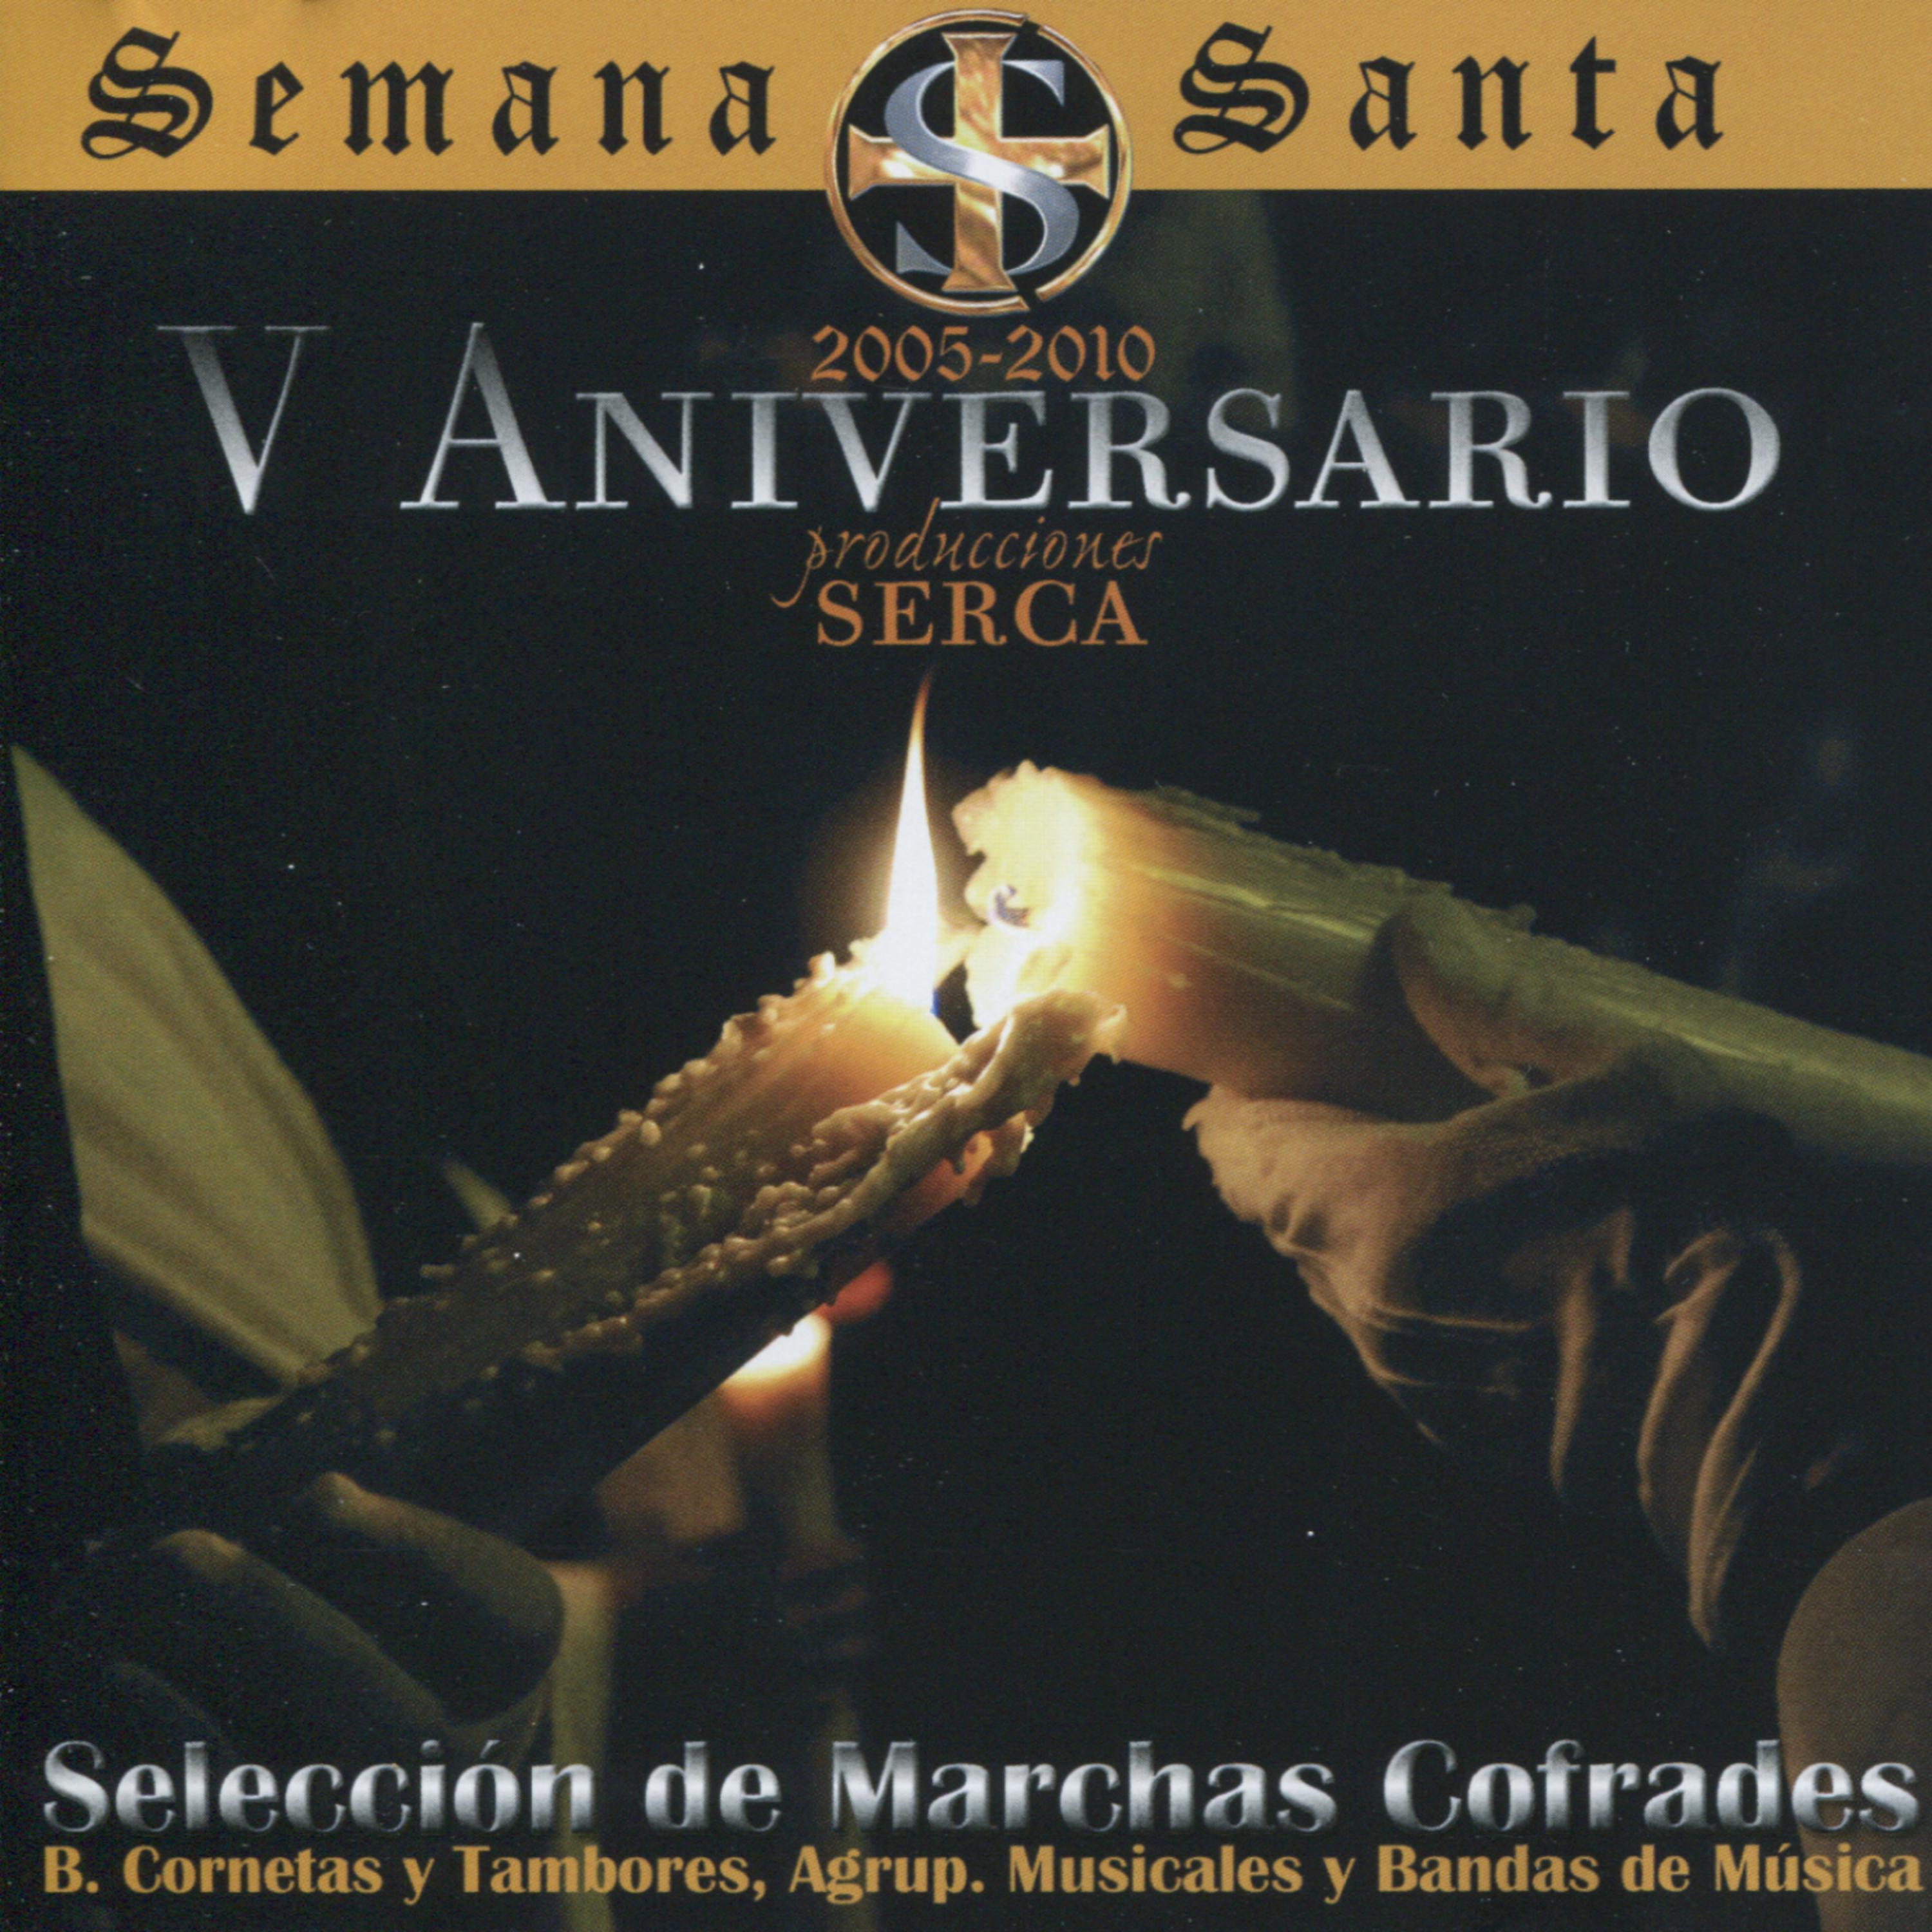 Постер альбома Semana Santa 2005-2010 V Aniversario